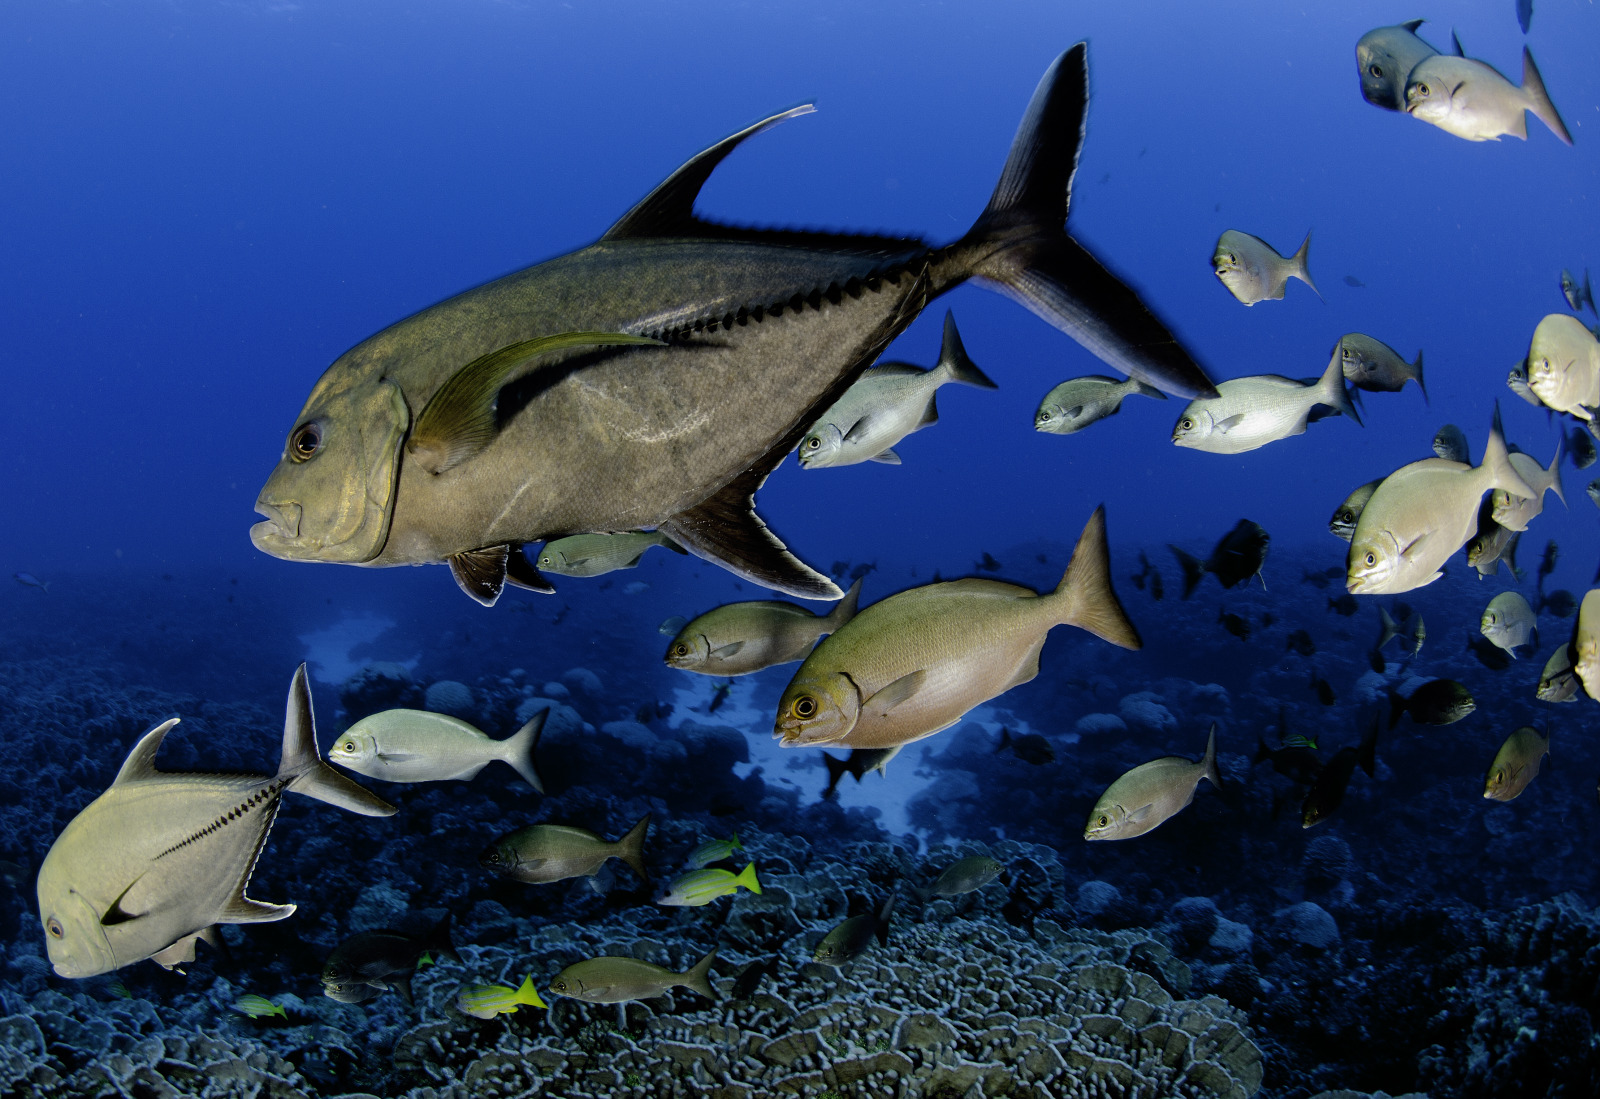 Pitcairn Island fish 1, Enric Sala, National Geographic